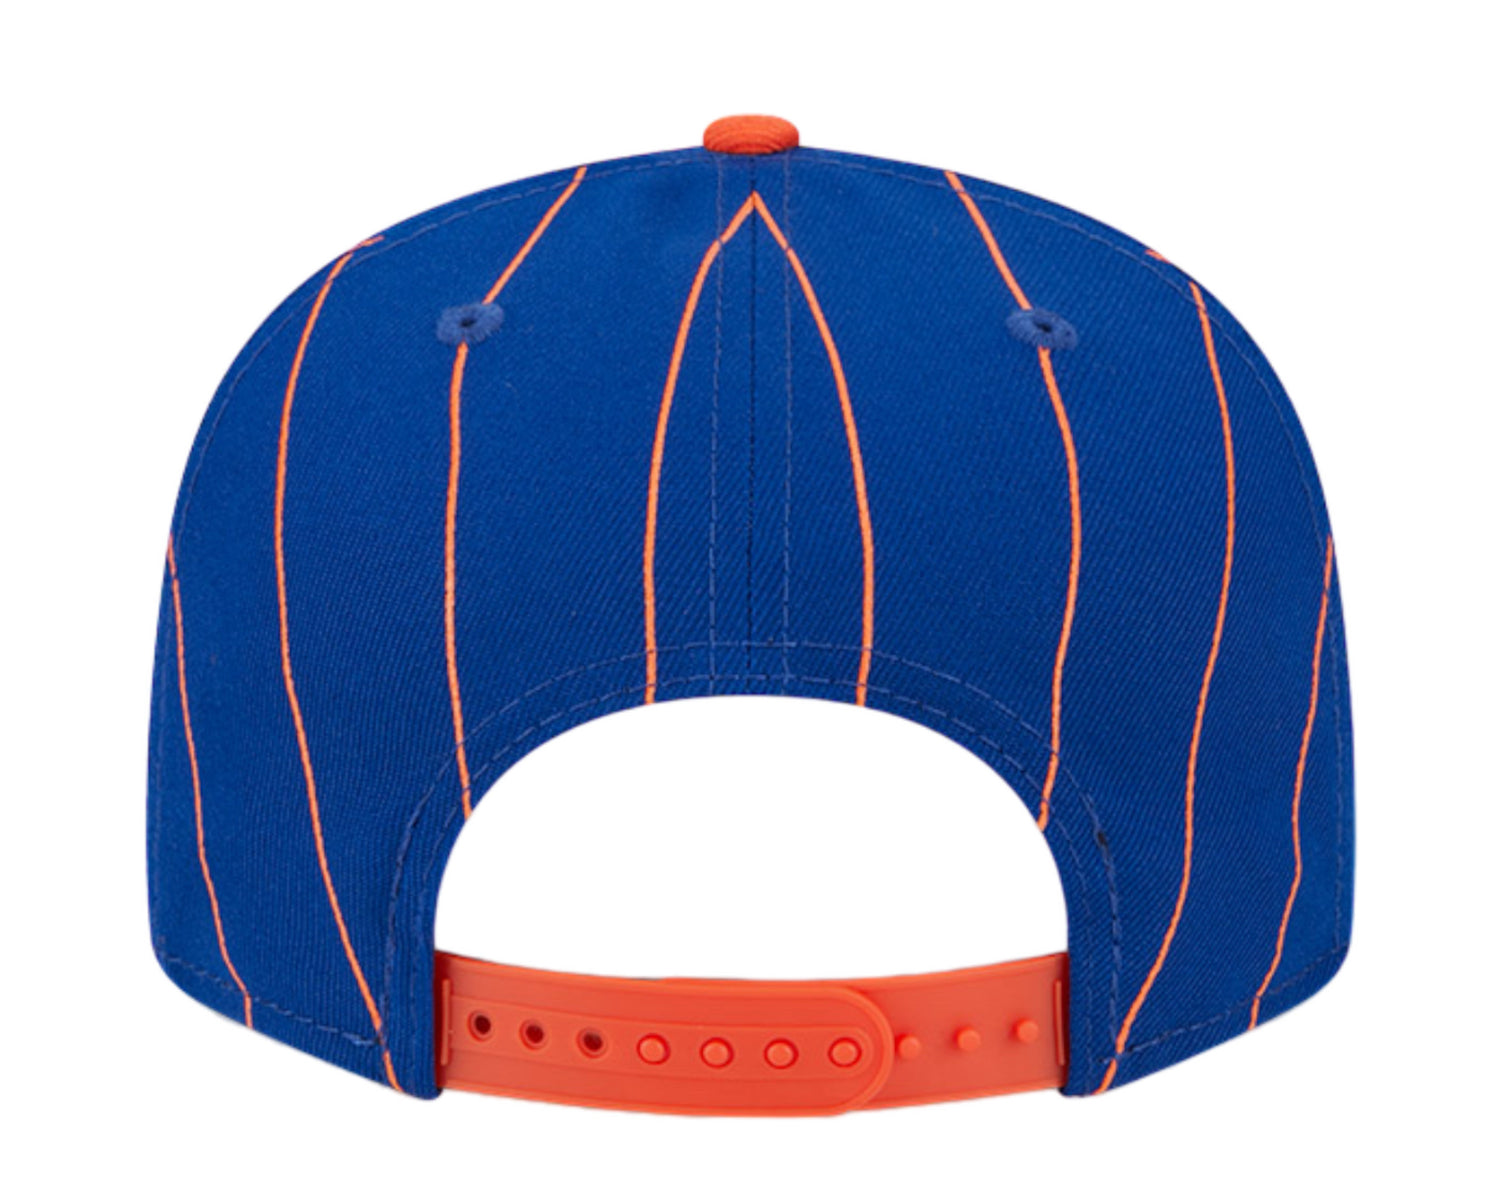 New Era 9Fifty MiLB Syracuse Mets Vintage Snapback Hat